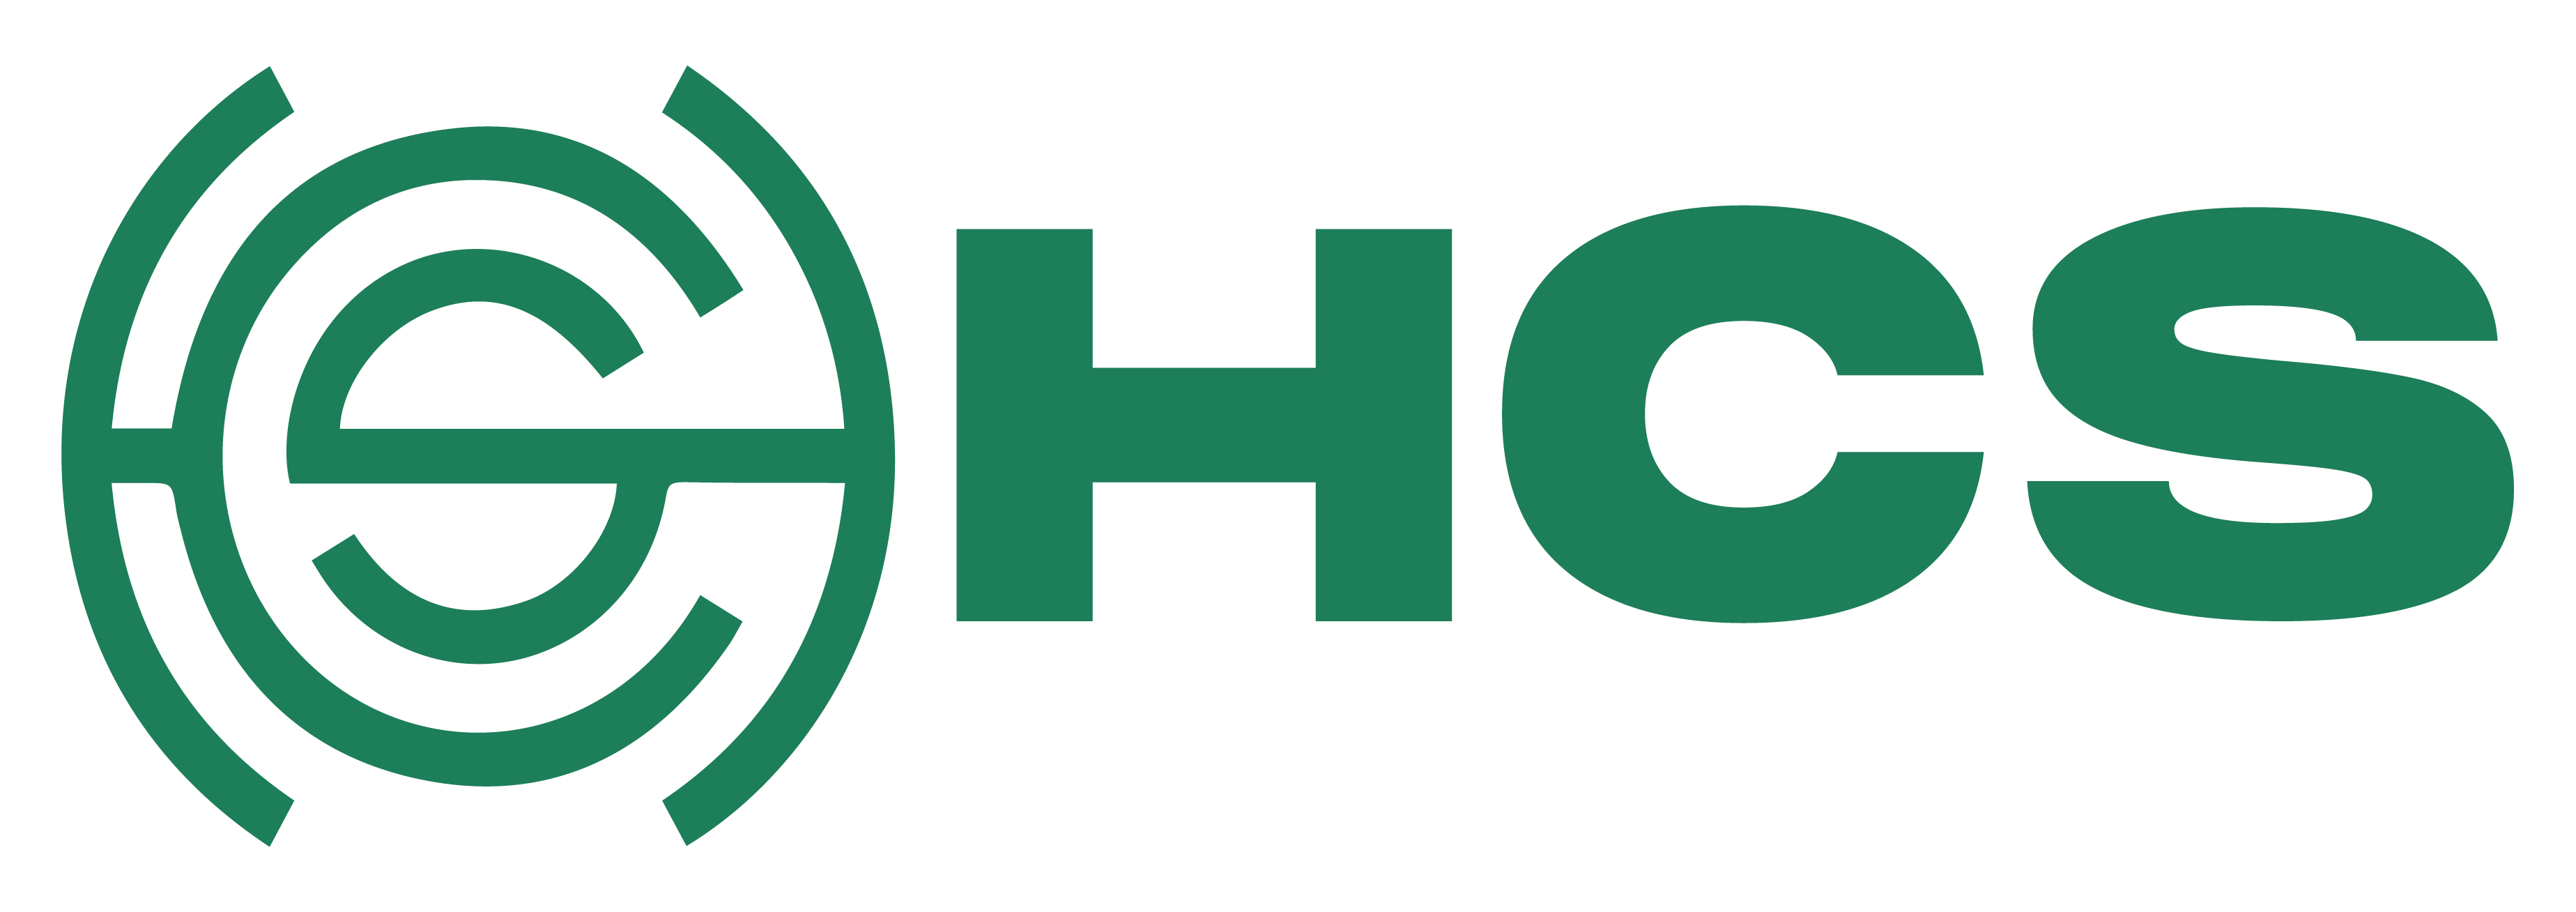 Hemp Carbon Standard